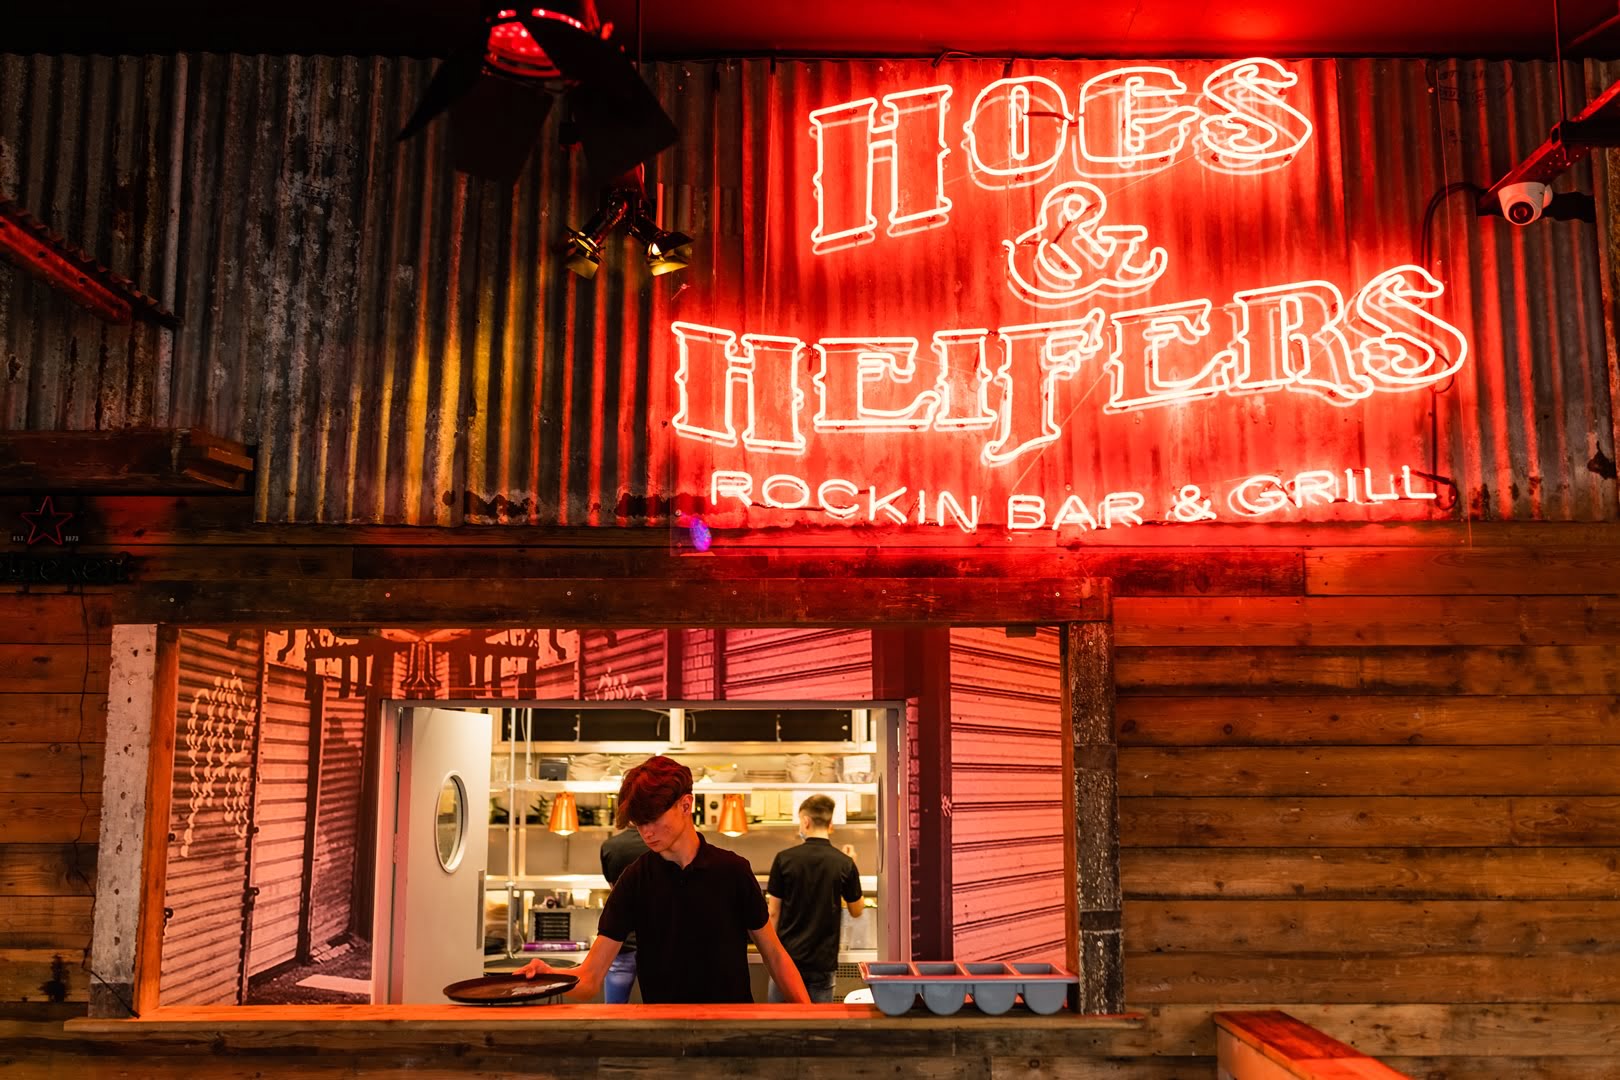 Hogs and Heifers Rockin Bar & Grill